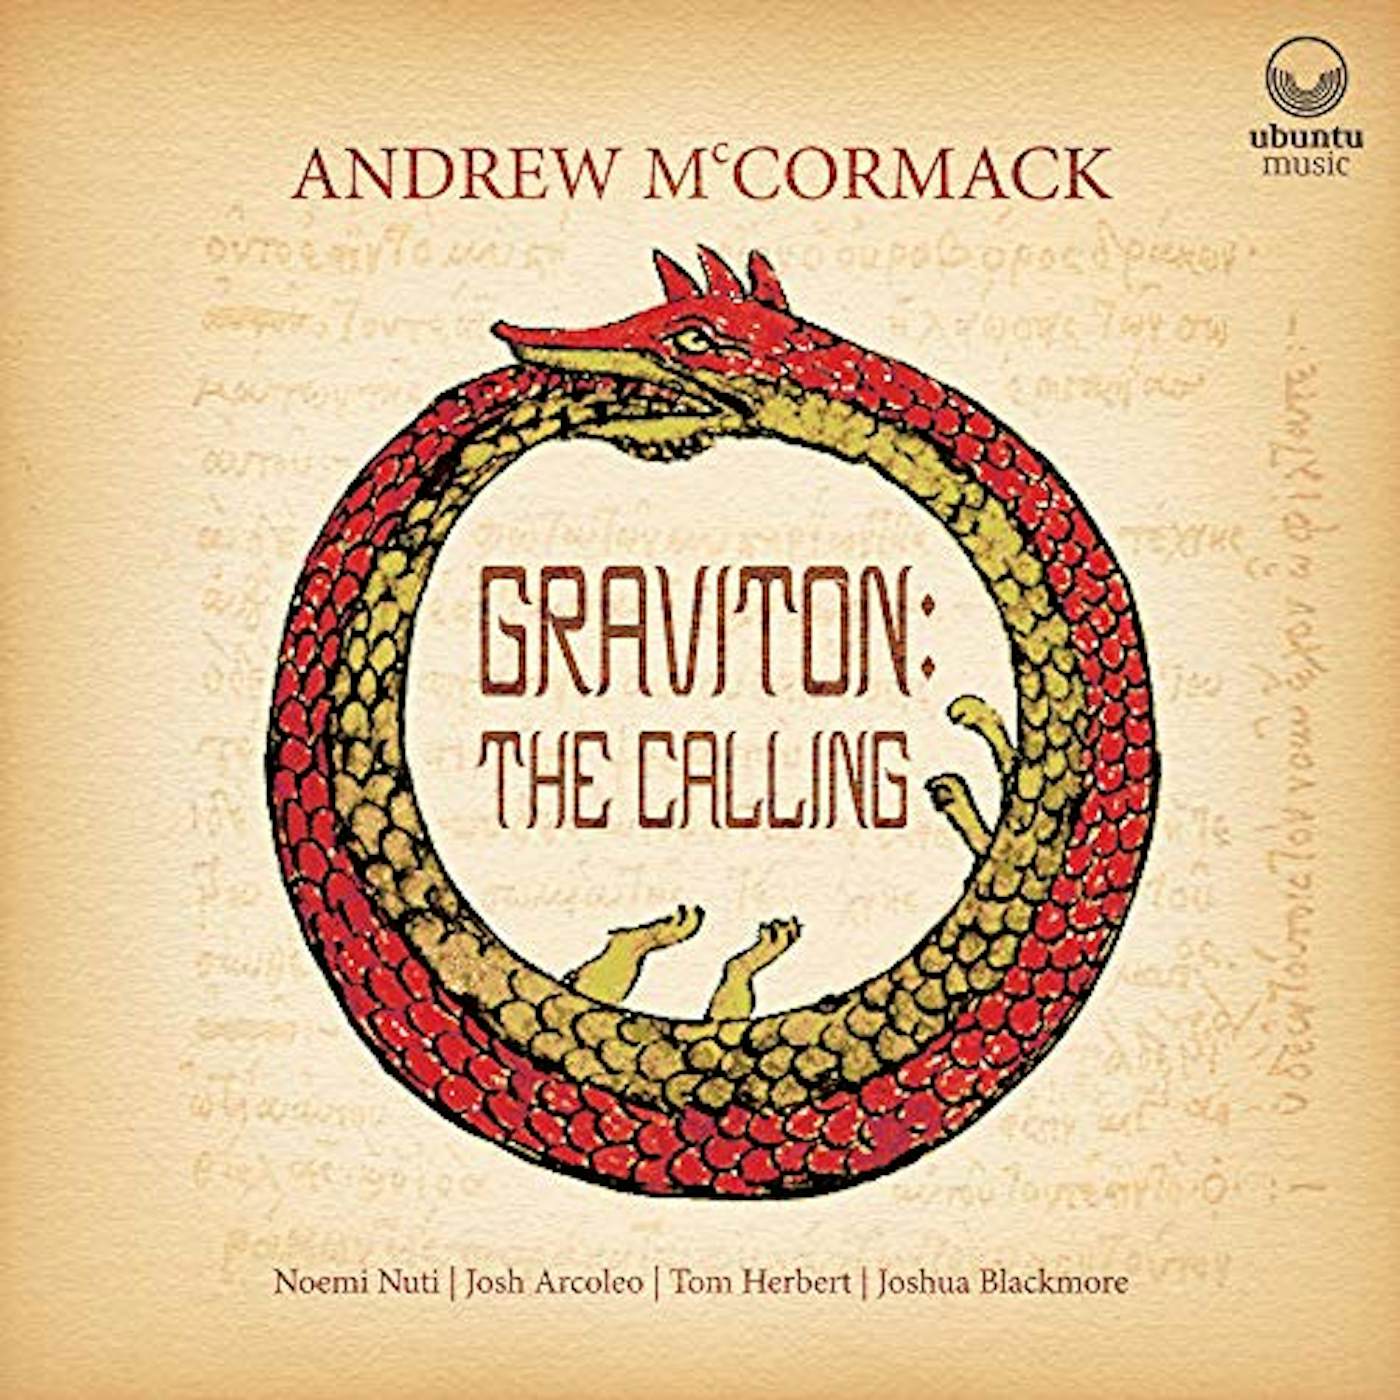 Andrew McCormack GRAVITON: THE CALLING CD